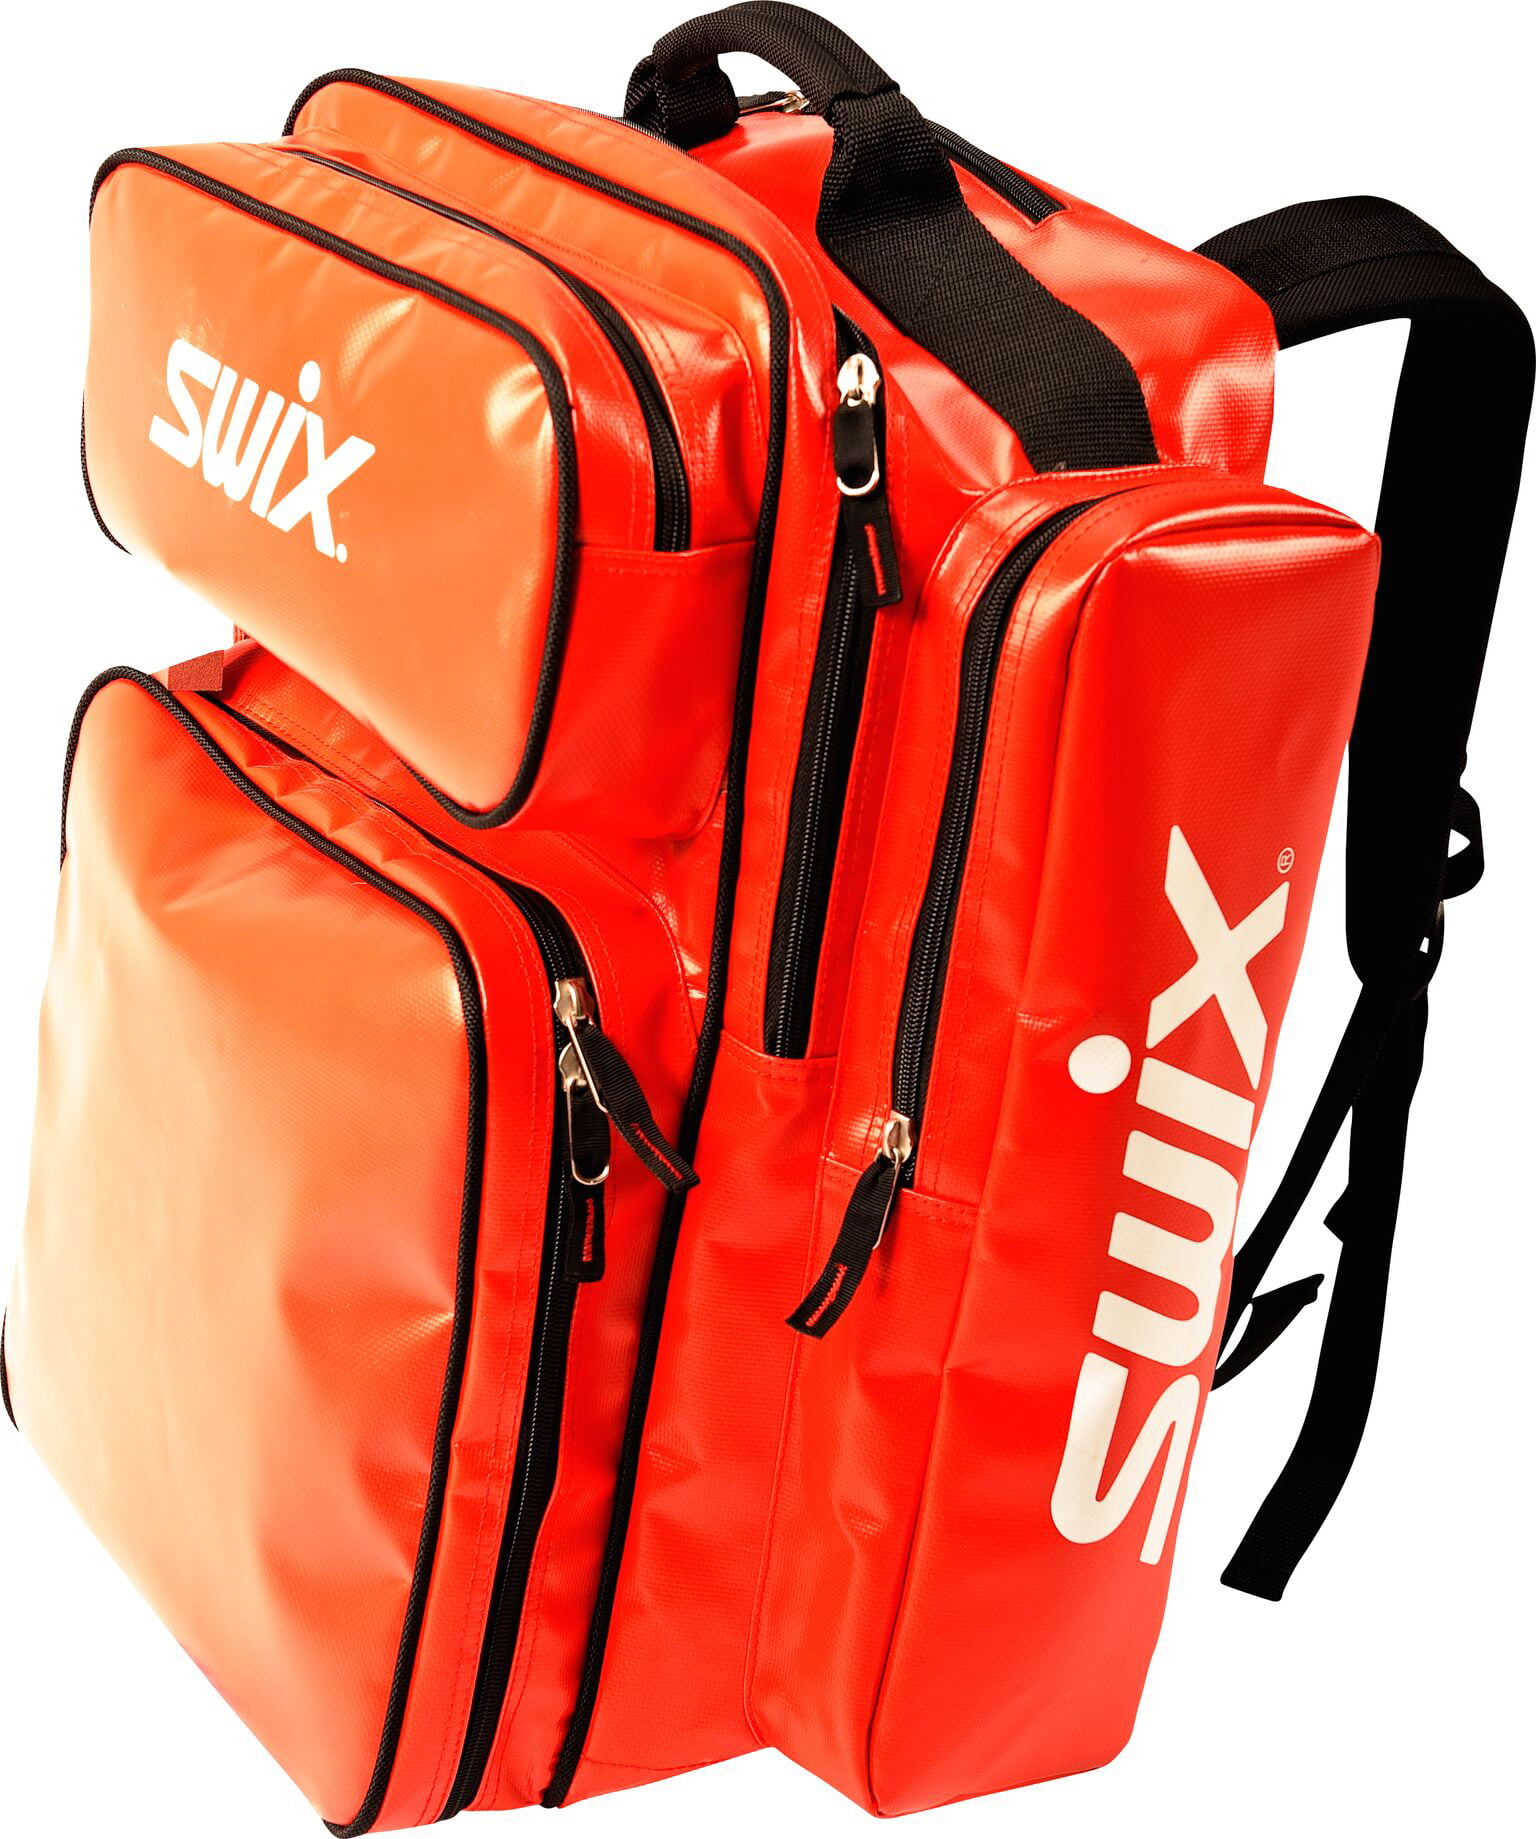 Swix Gold Lite Tri Pack Boot Bag Grey Flannel Ski and Snowboard Bag NEW